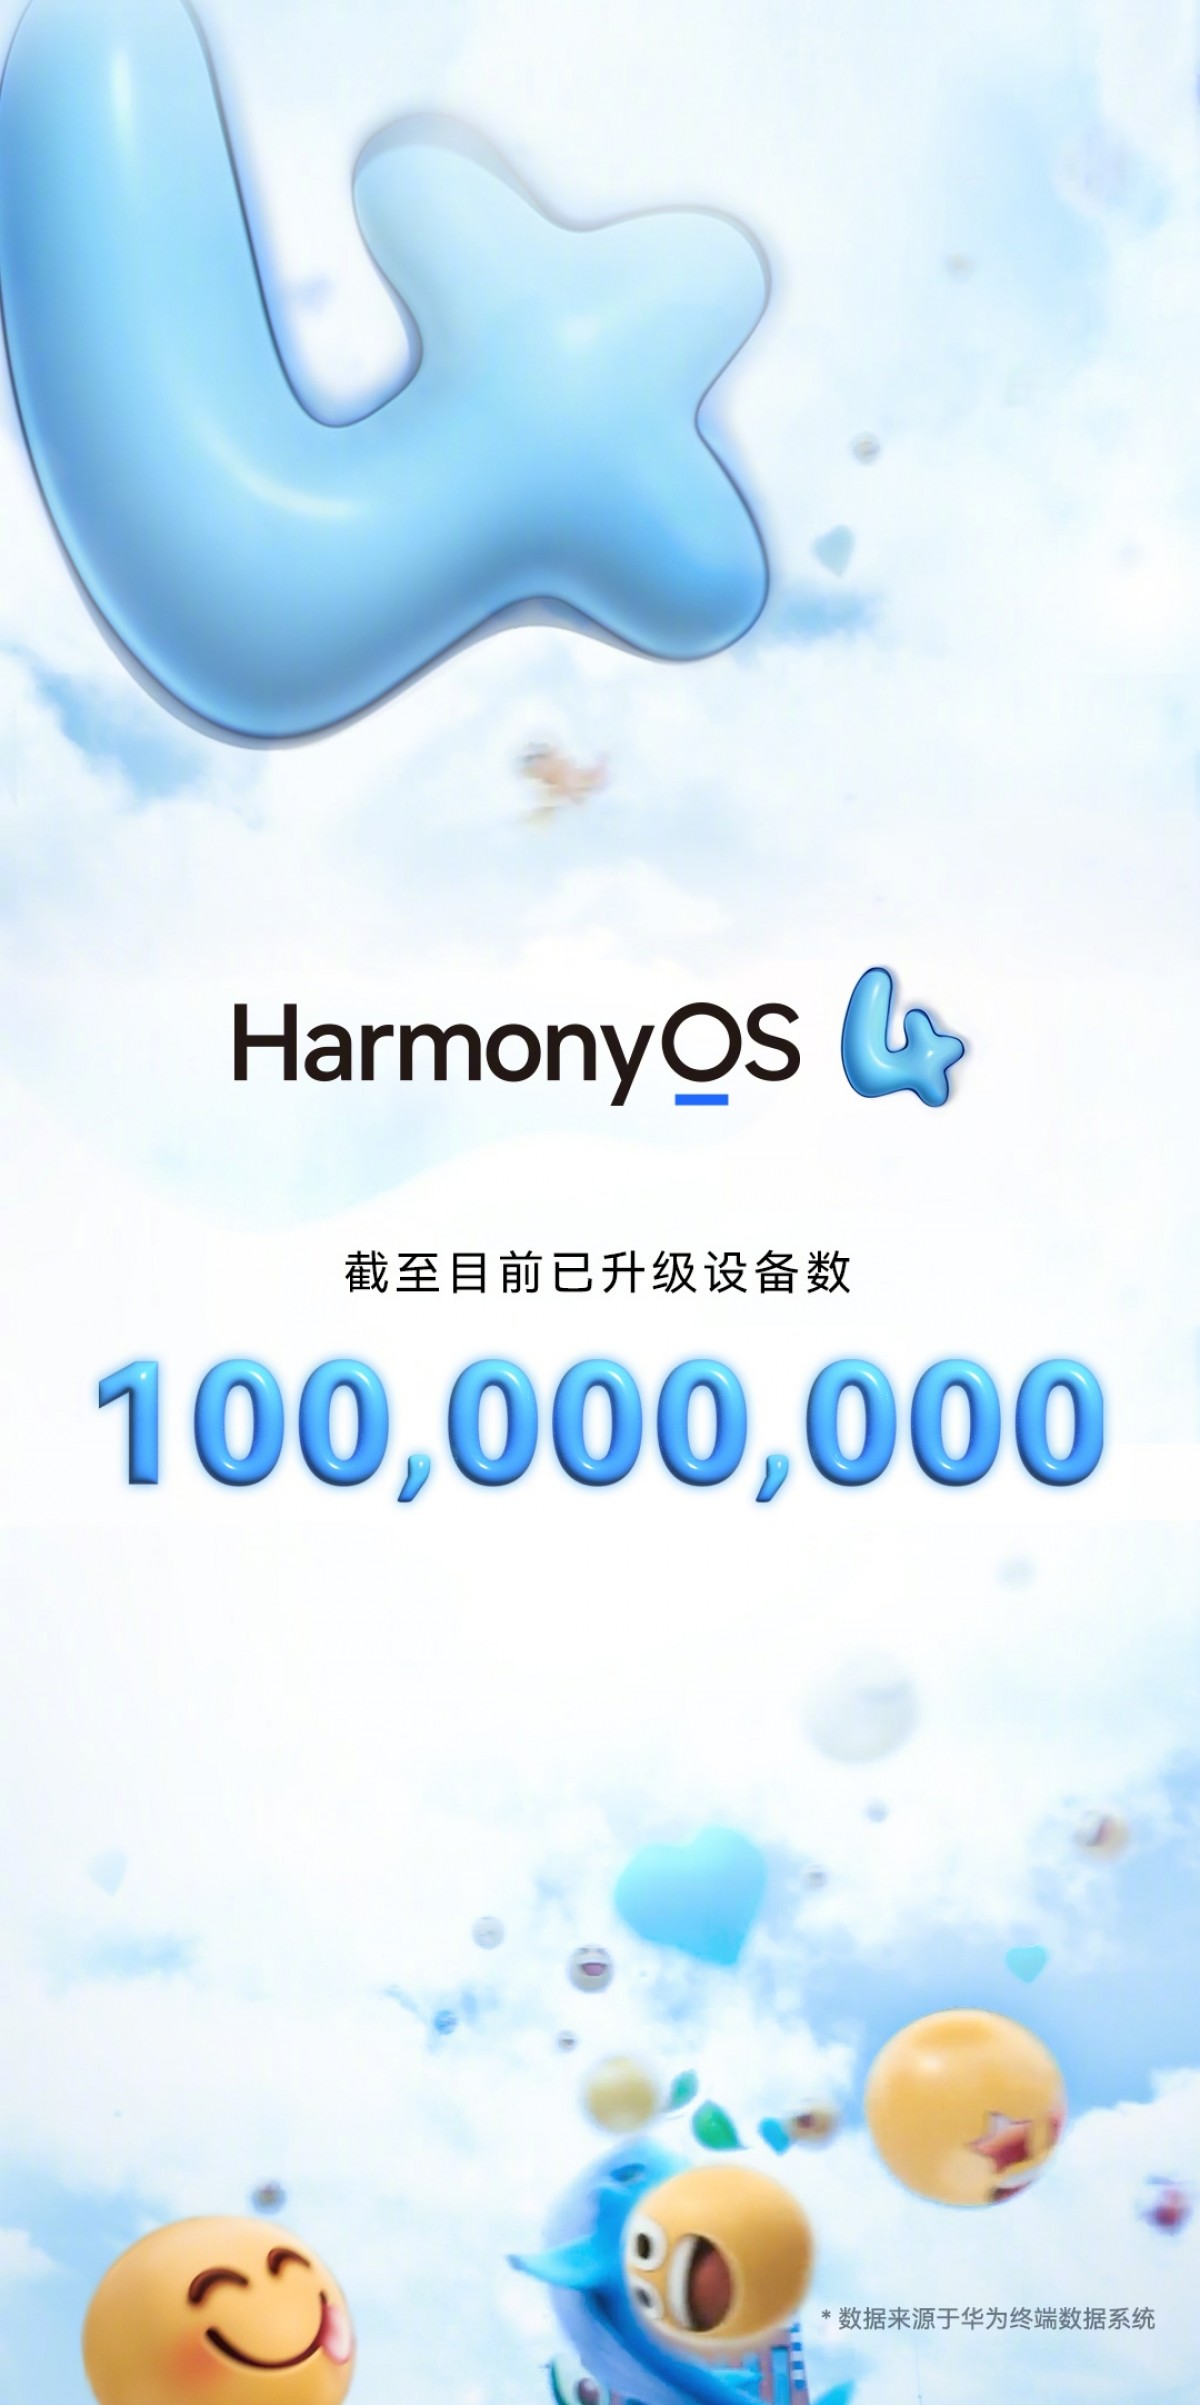 Huawei célèbre 100 millions d'appareils avec HarmonyOS 4